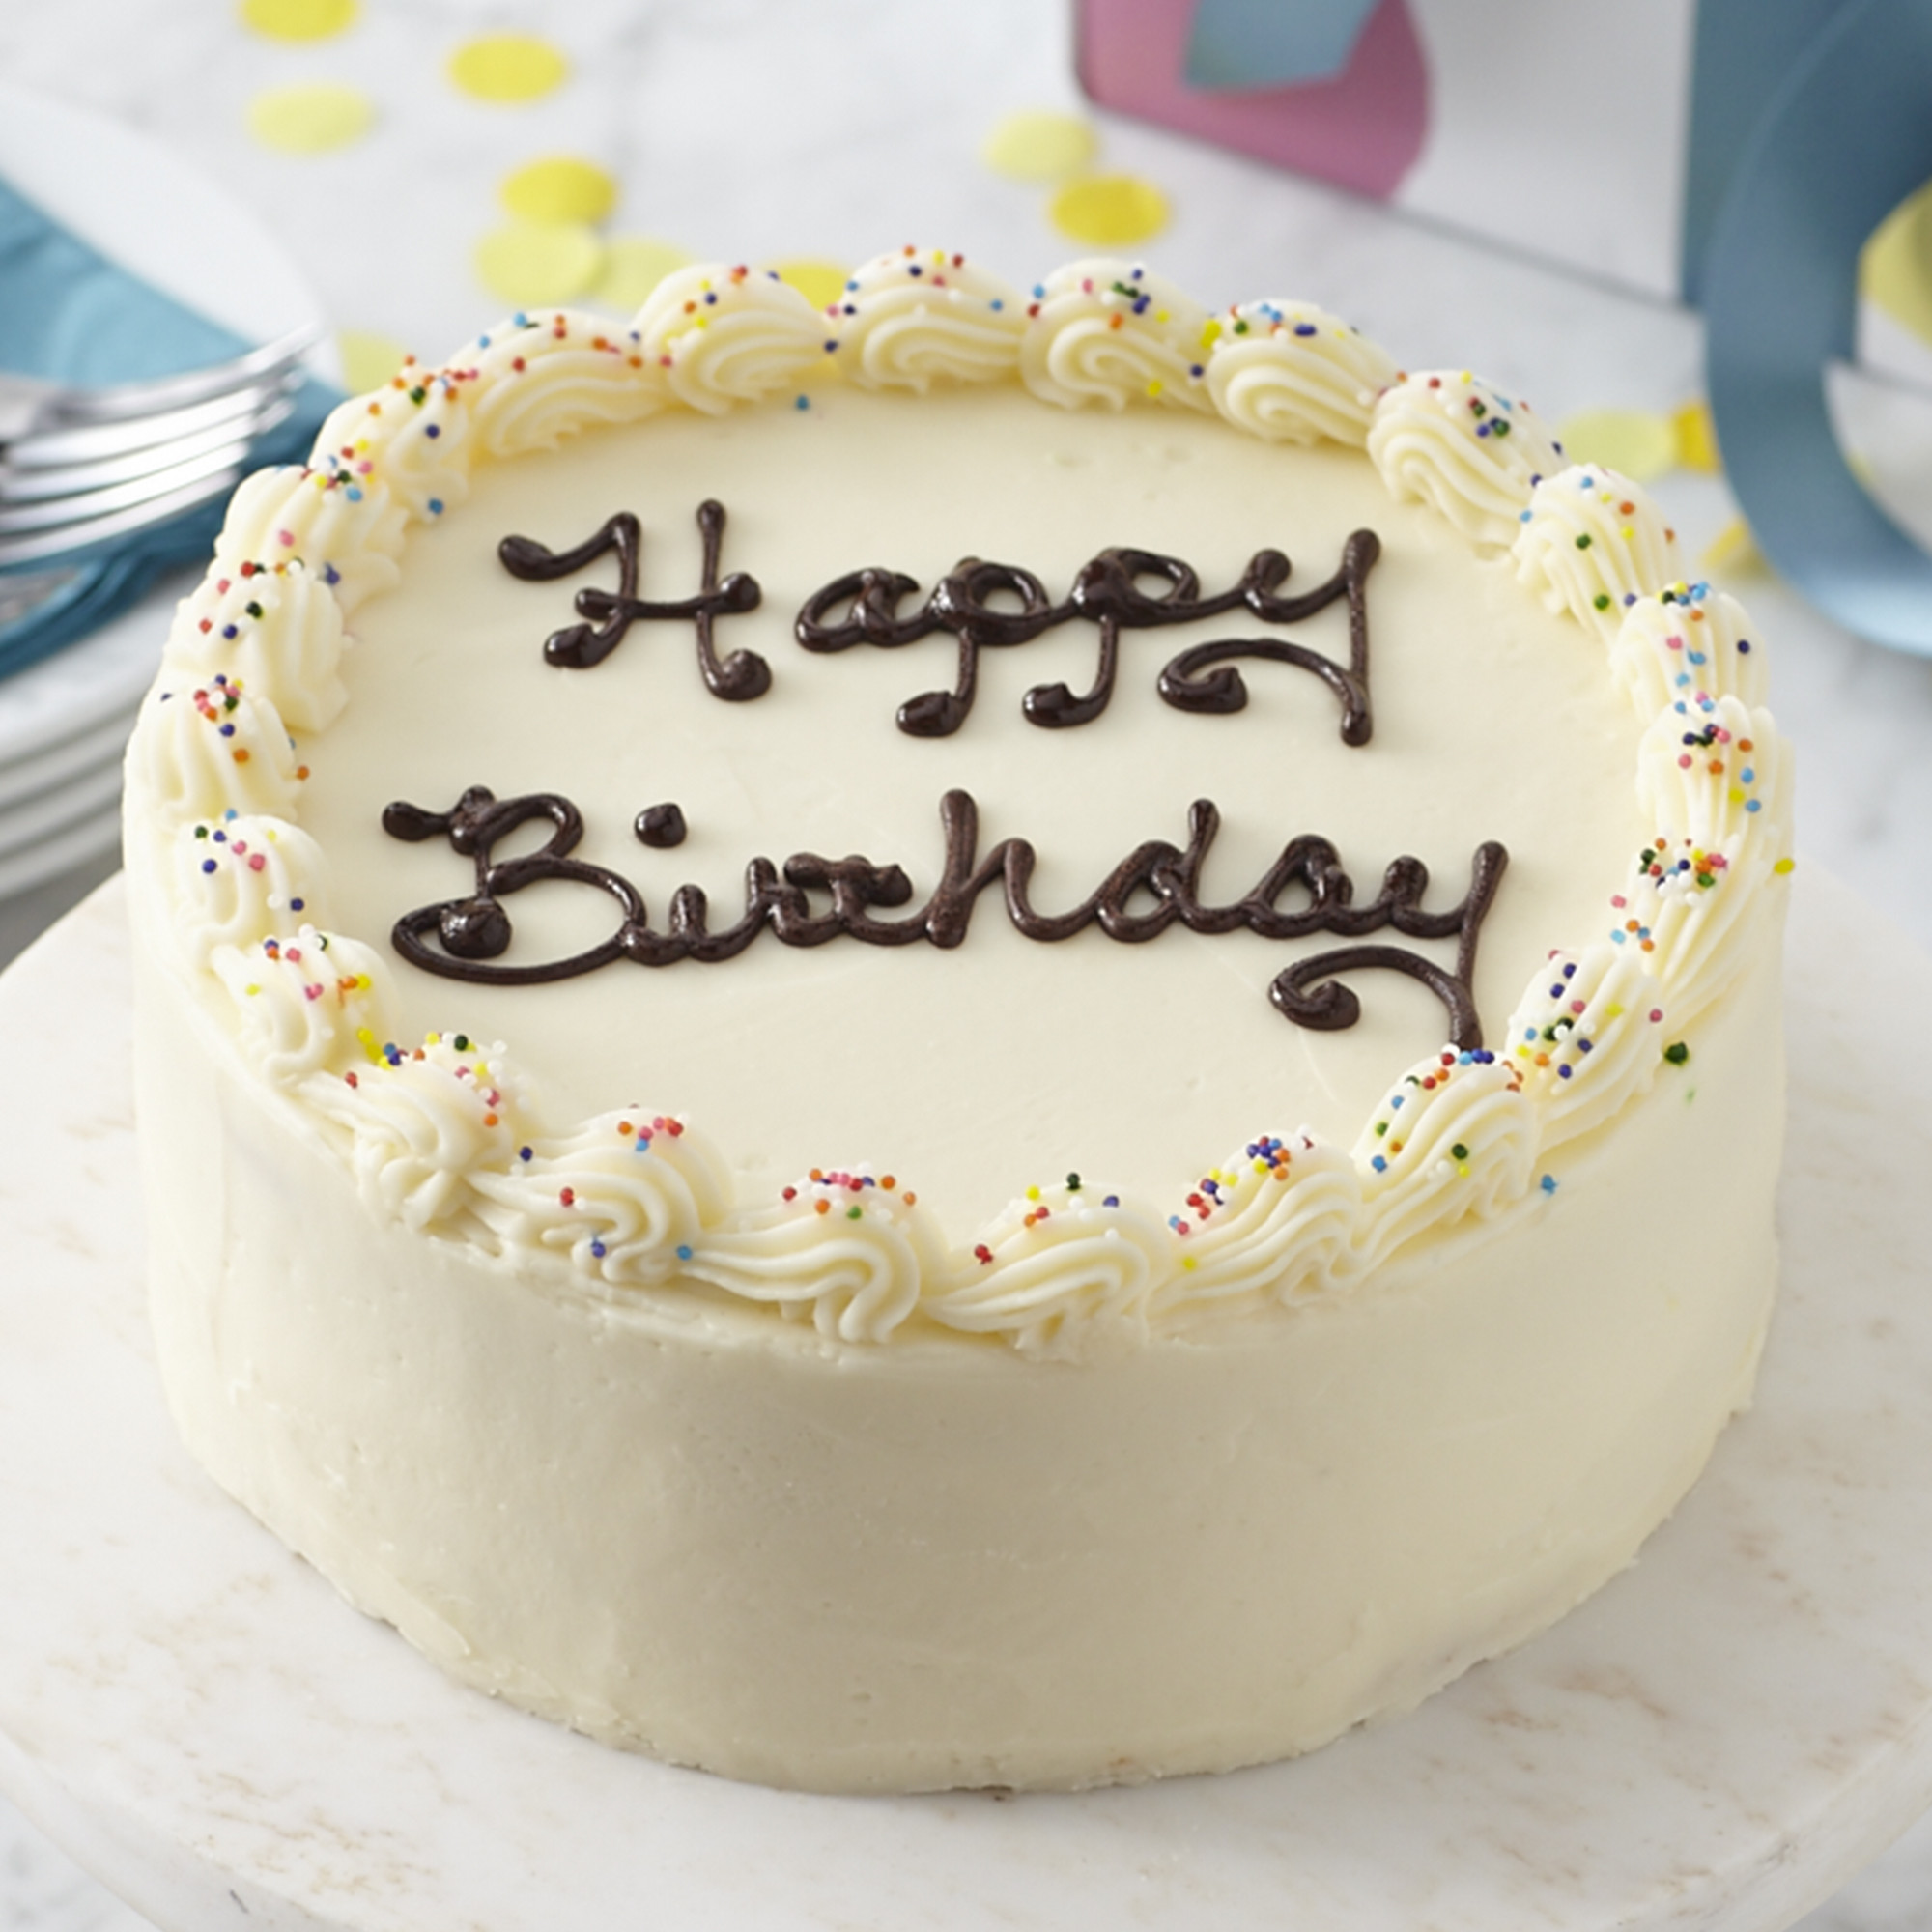 Images Of A Birthday Cake
 Birthday Celebration Cake